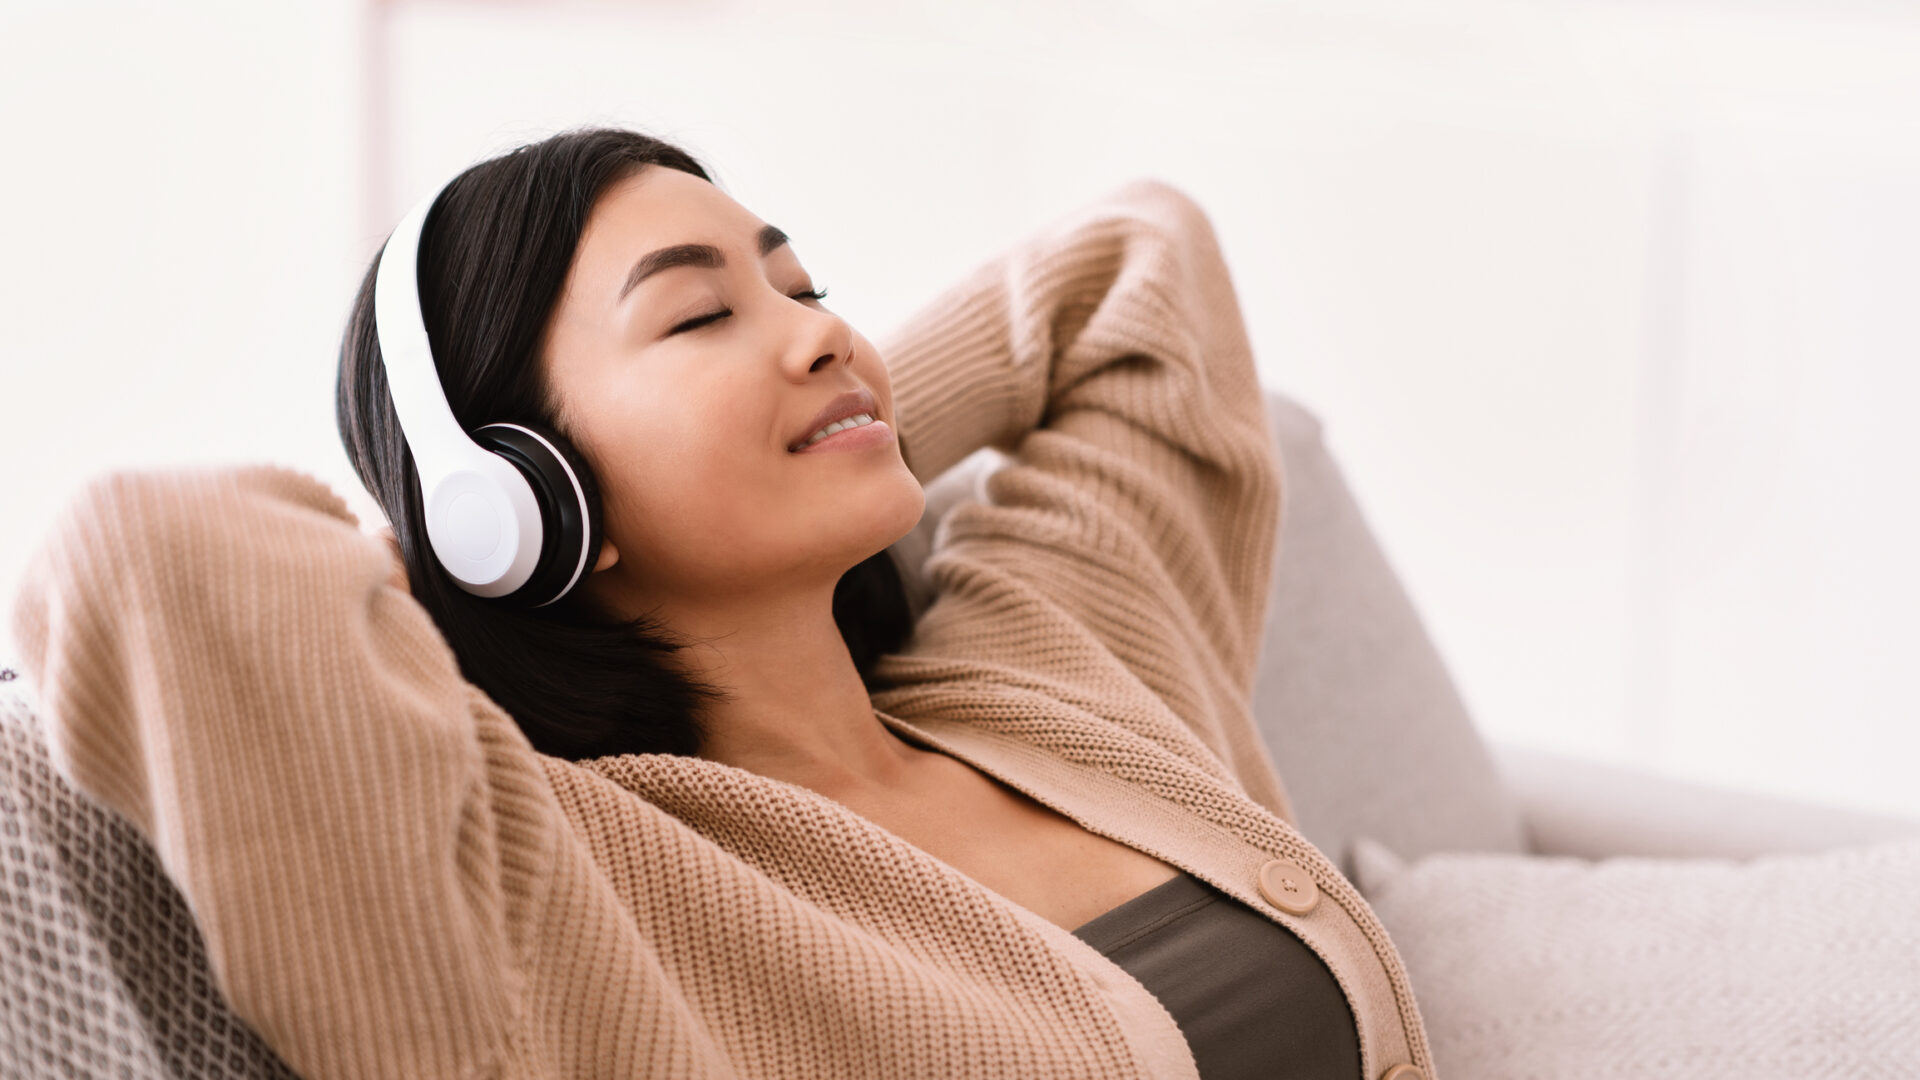 Asian woman listening to music wearing headphones